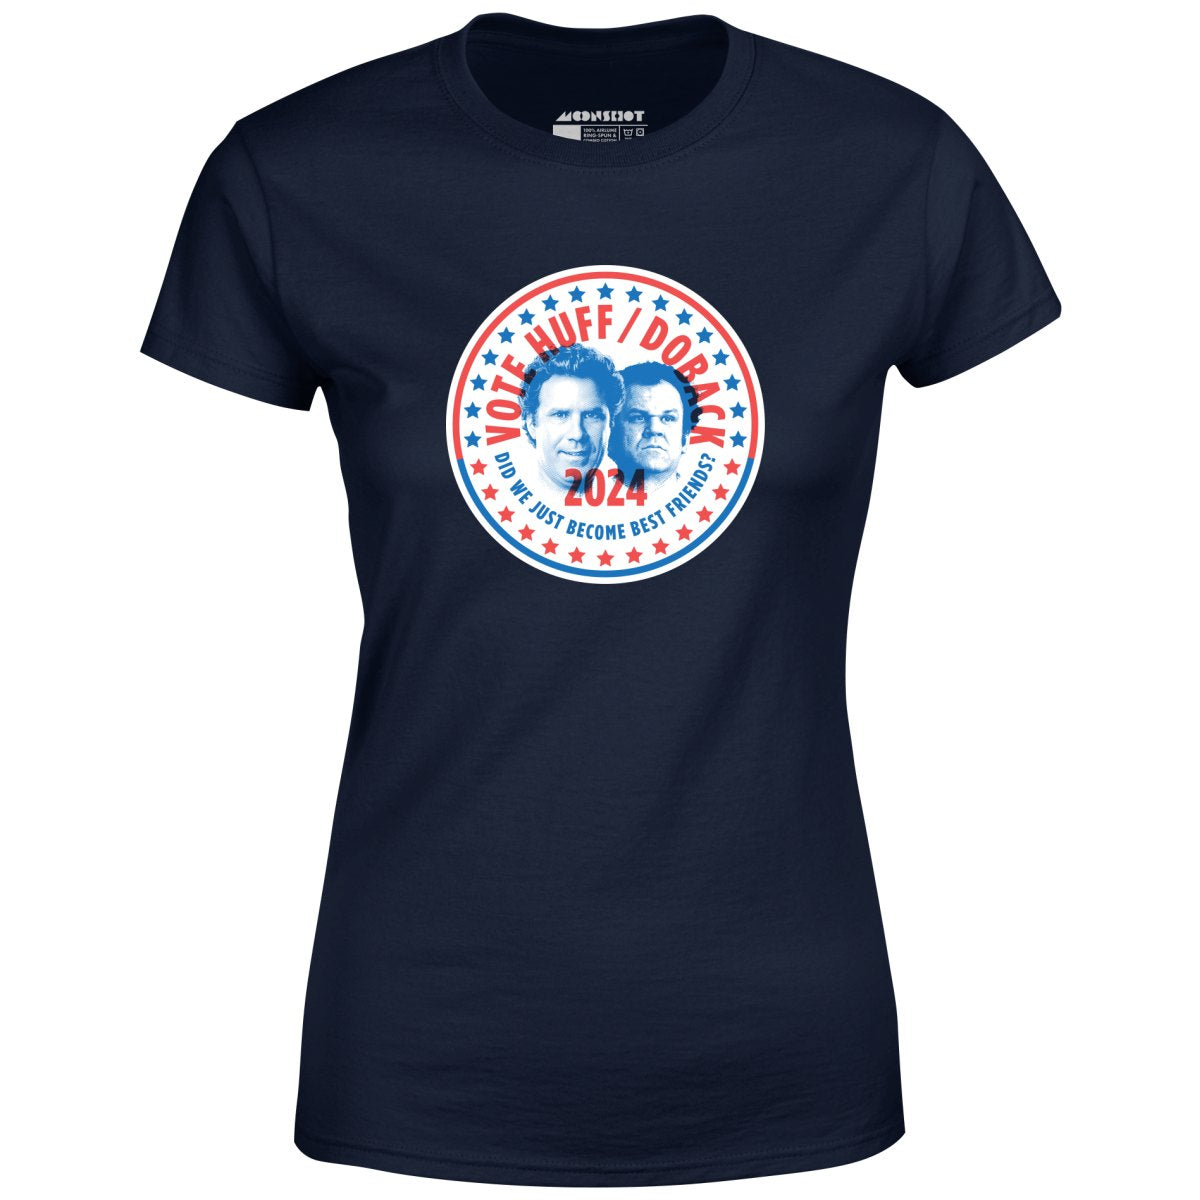 Huff Doback 2024 - Women's T-Shirt